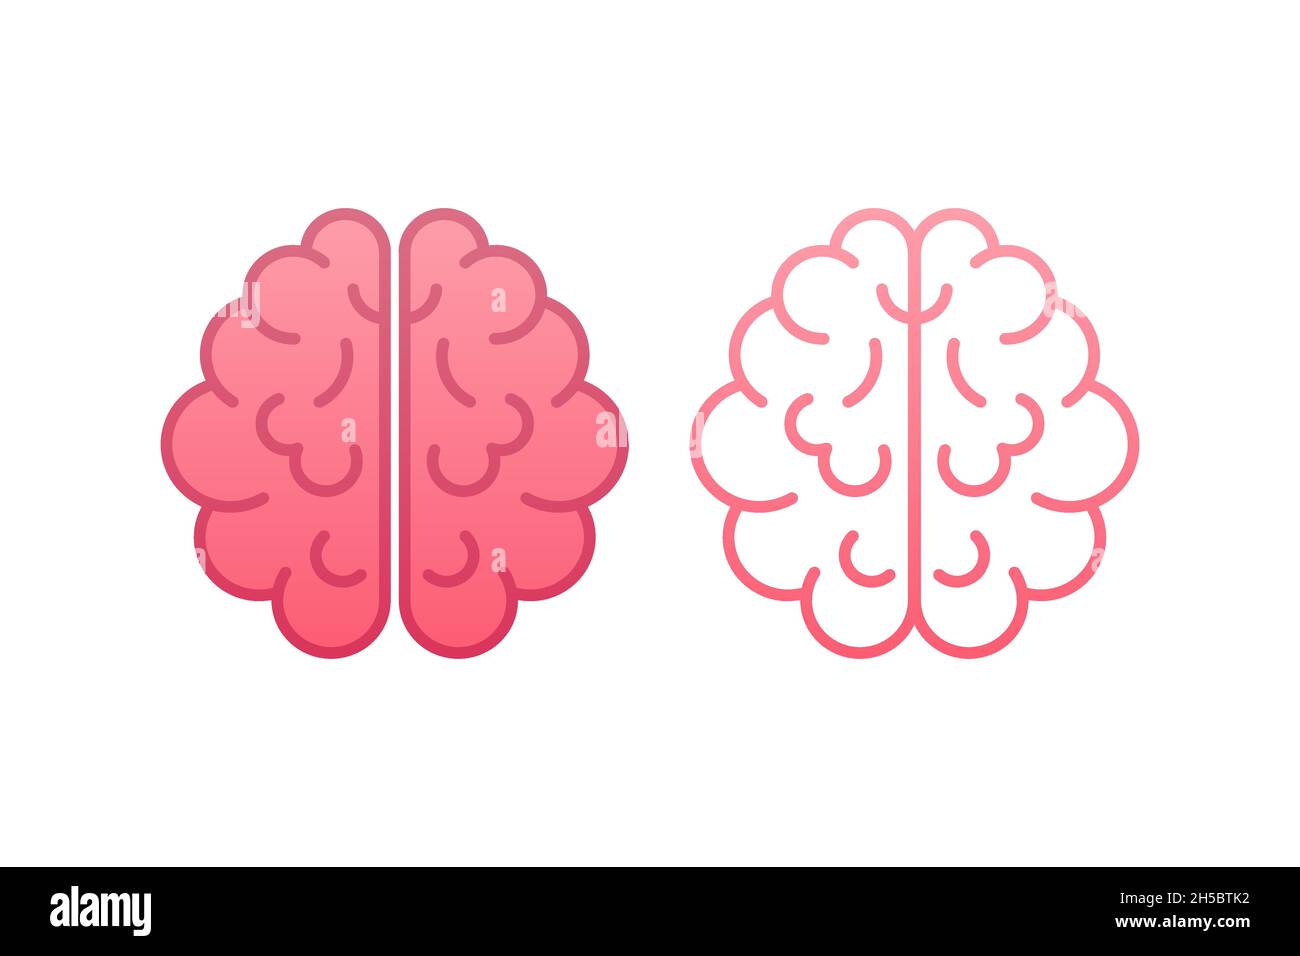 Human brain icon. Thinking process, brainstorming, good idea, brain activity. Vector stock illustration. Stock Vector